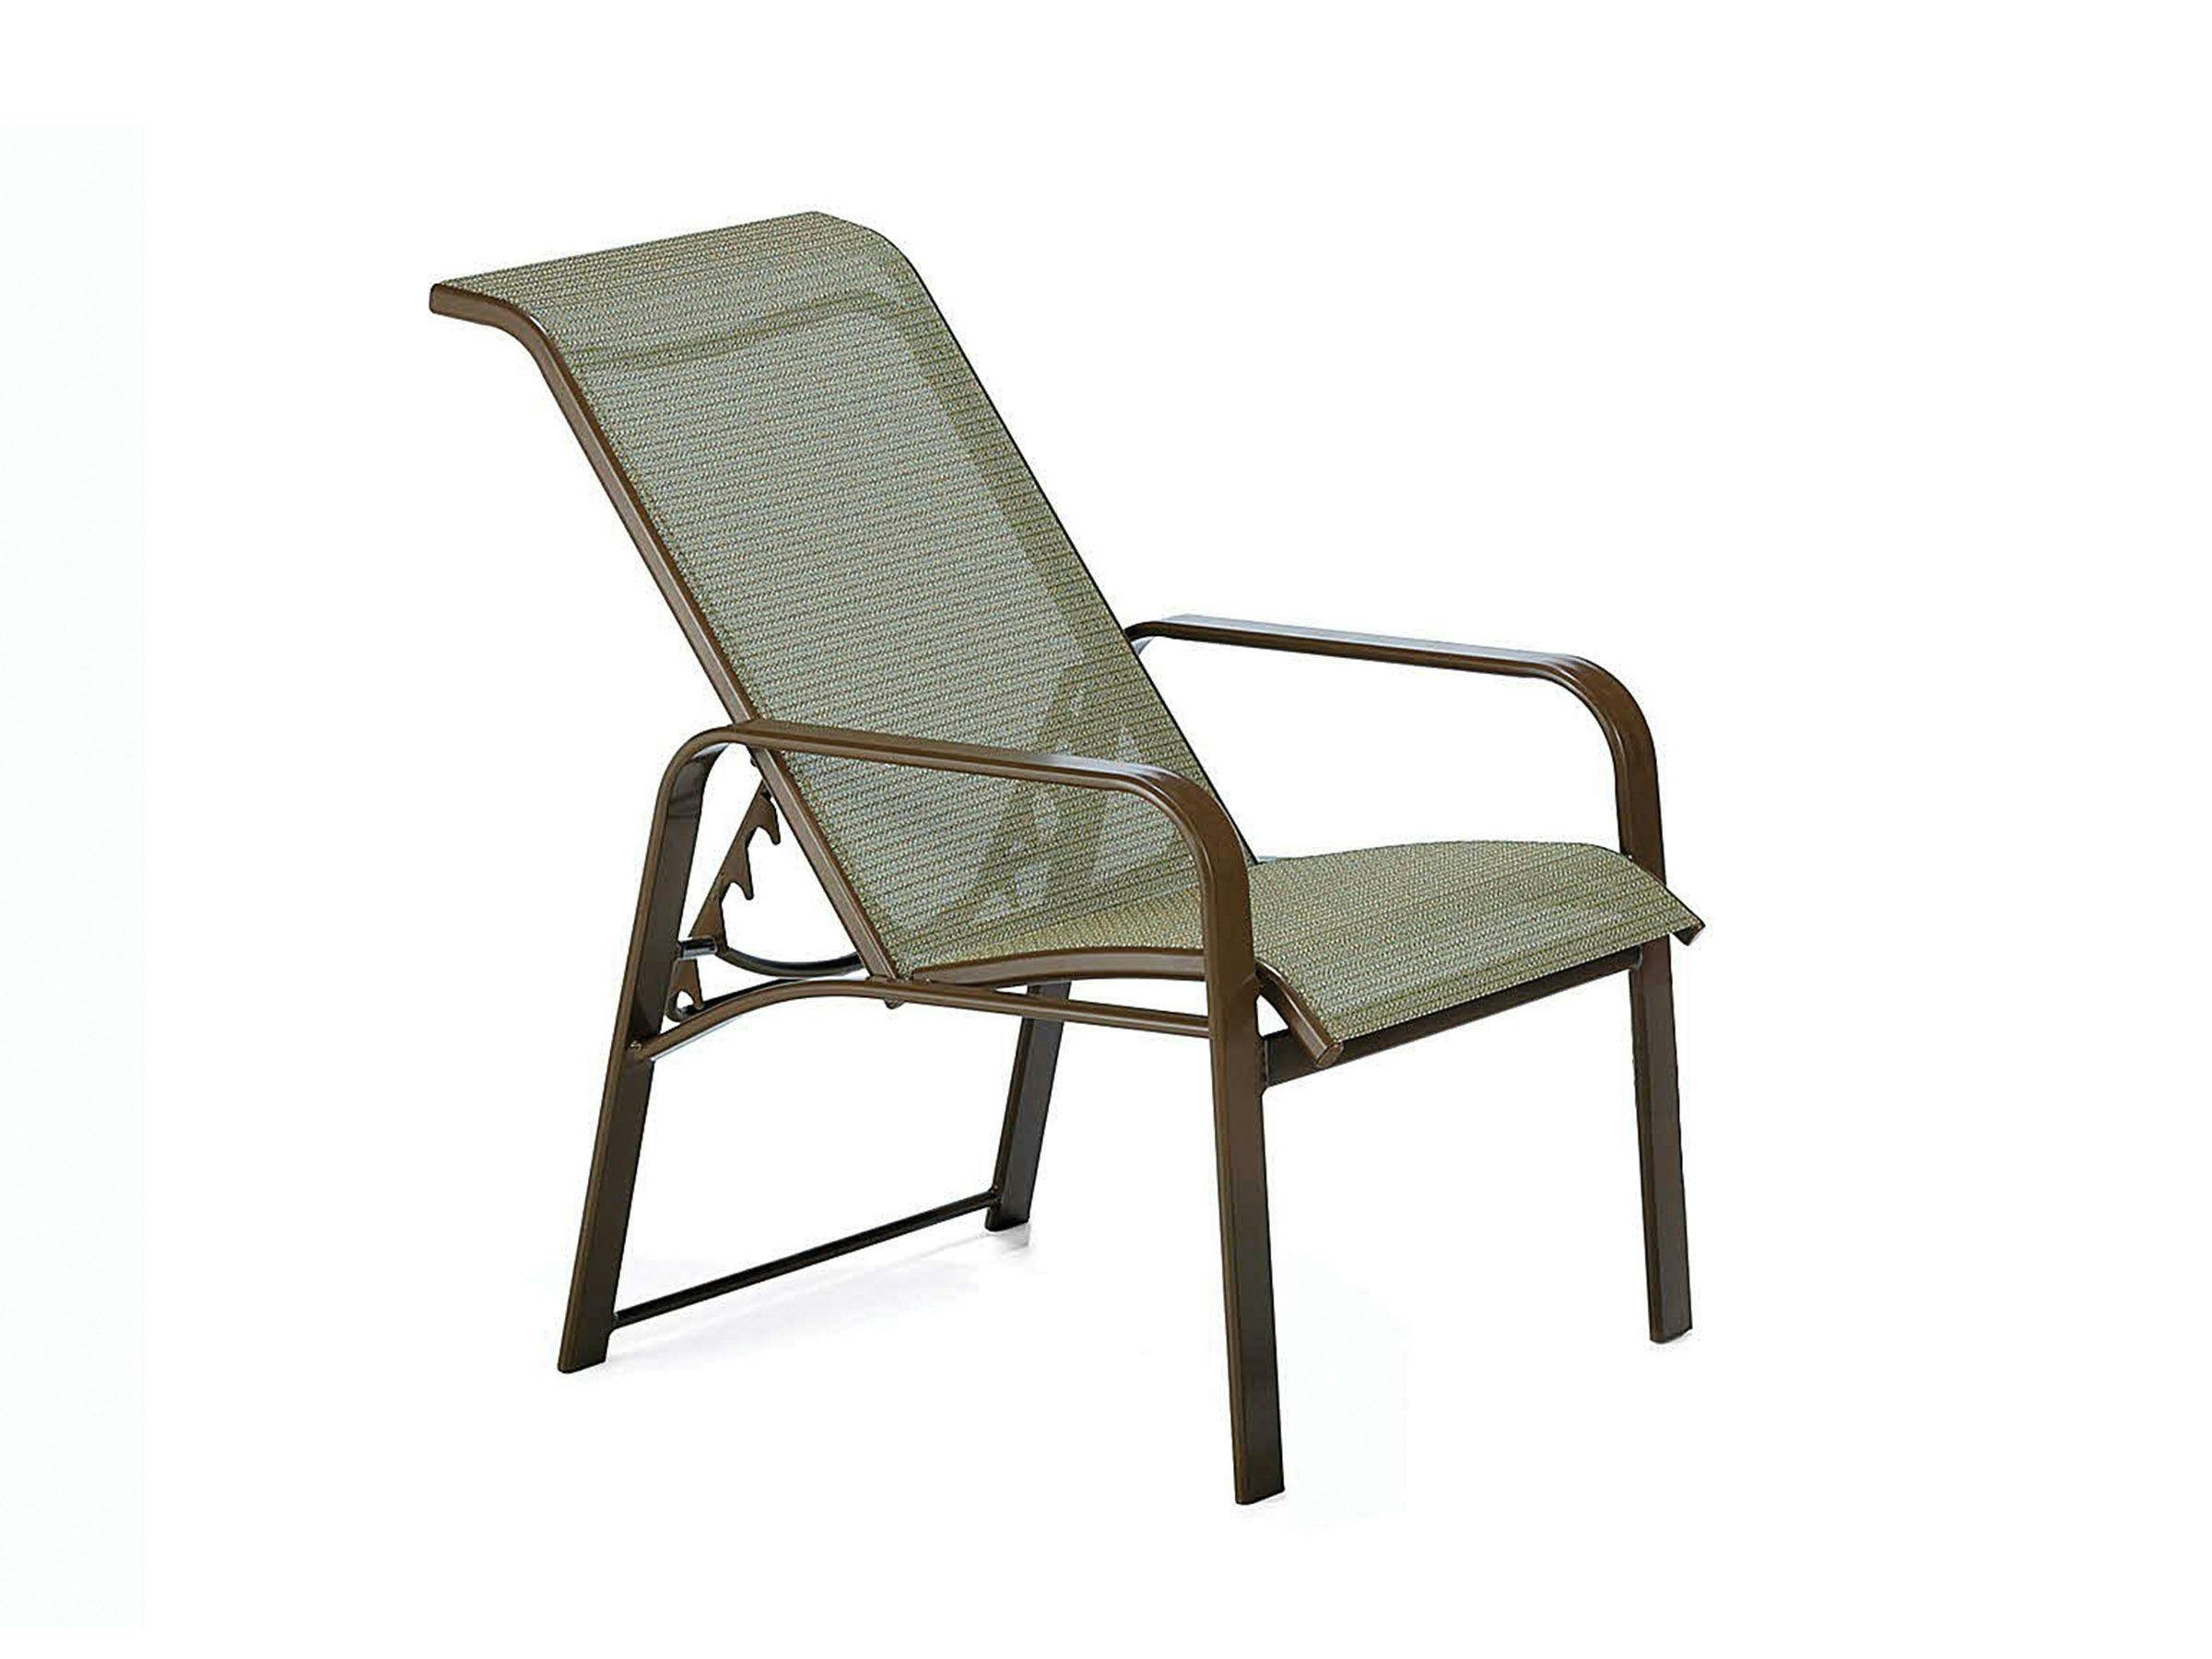 Seagrove II Sling Adjustable Chair